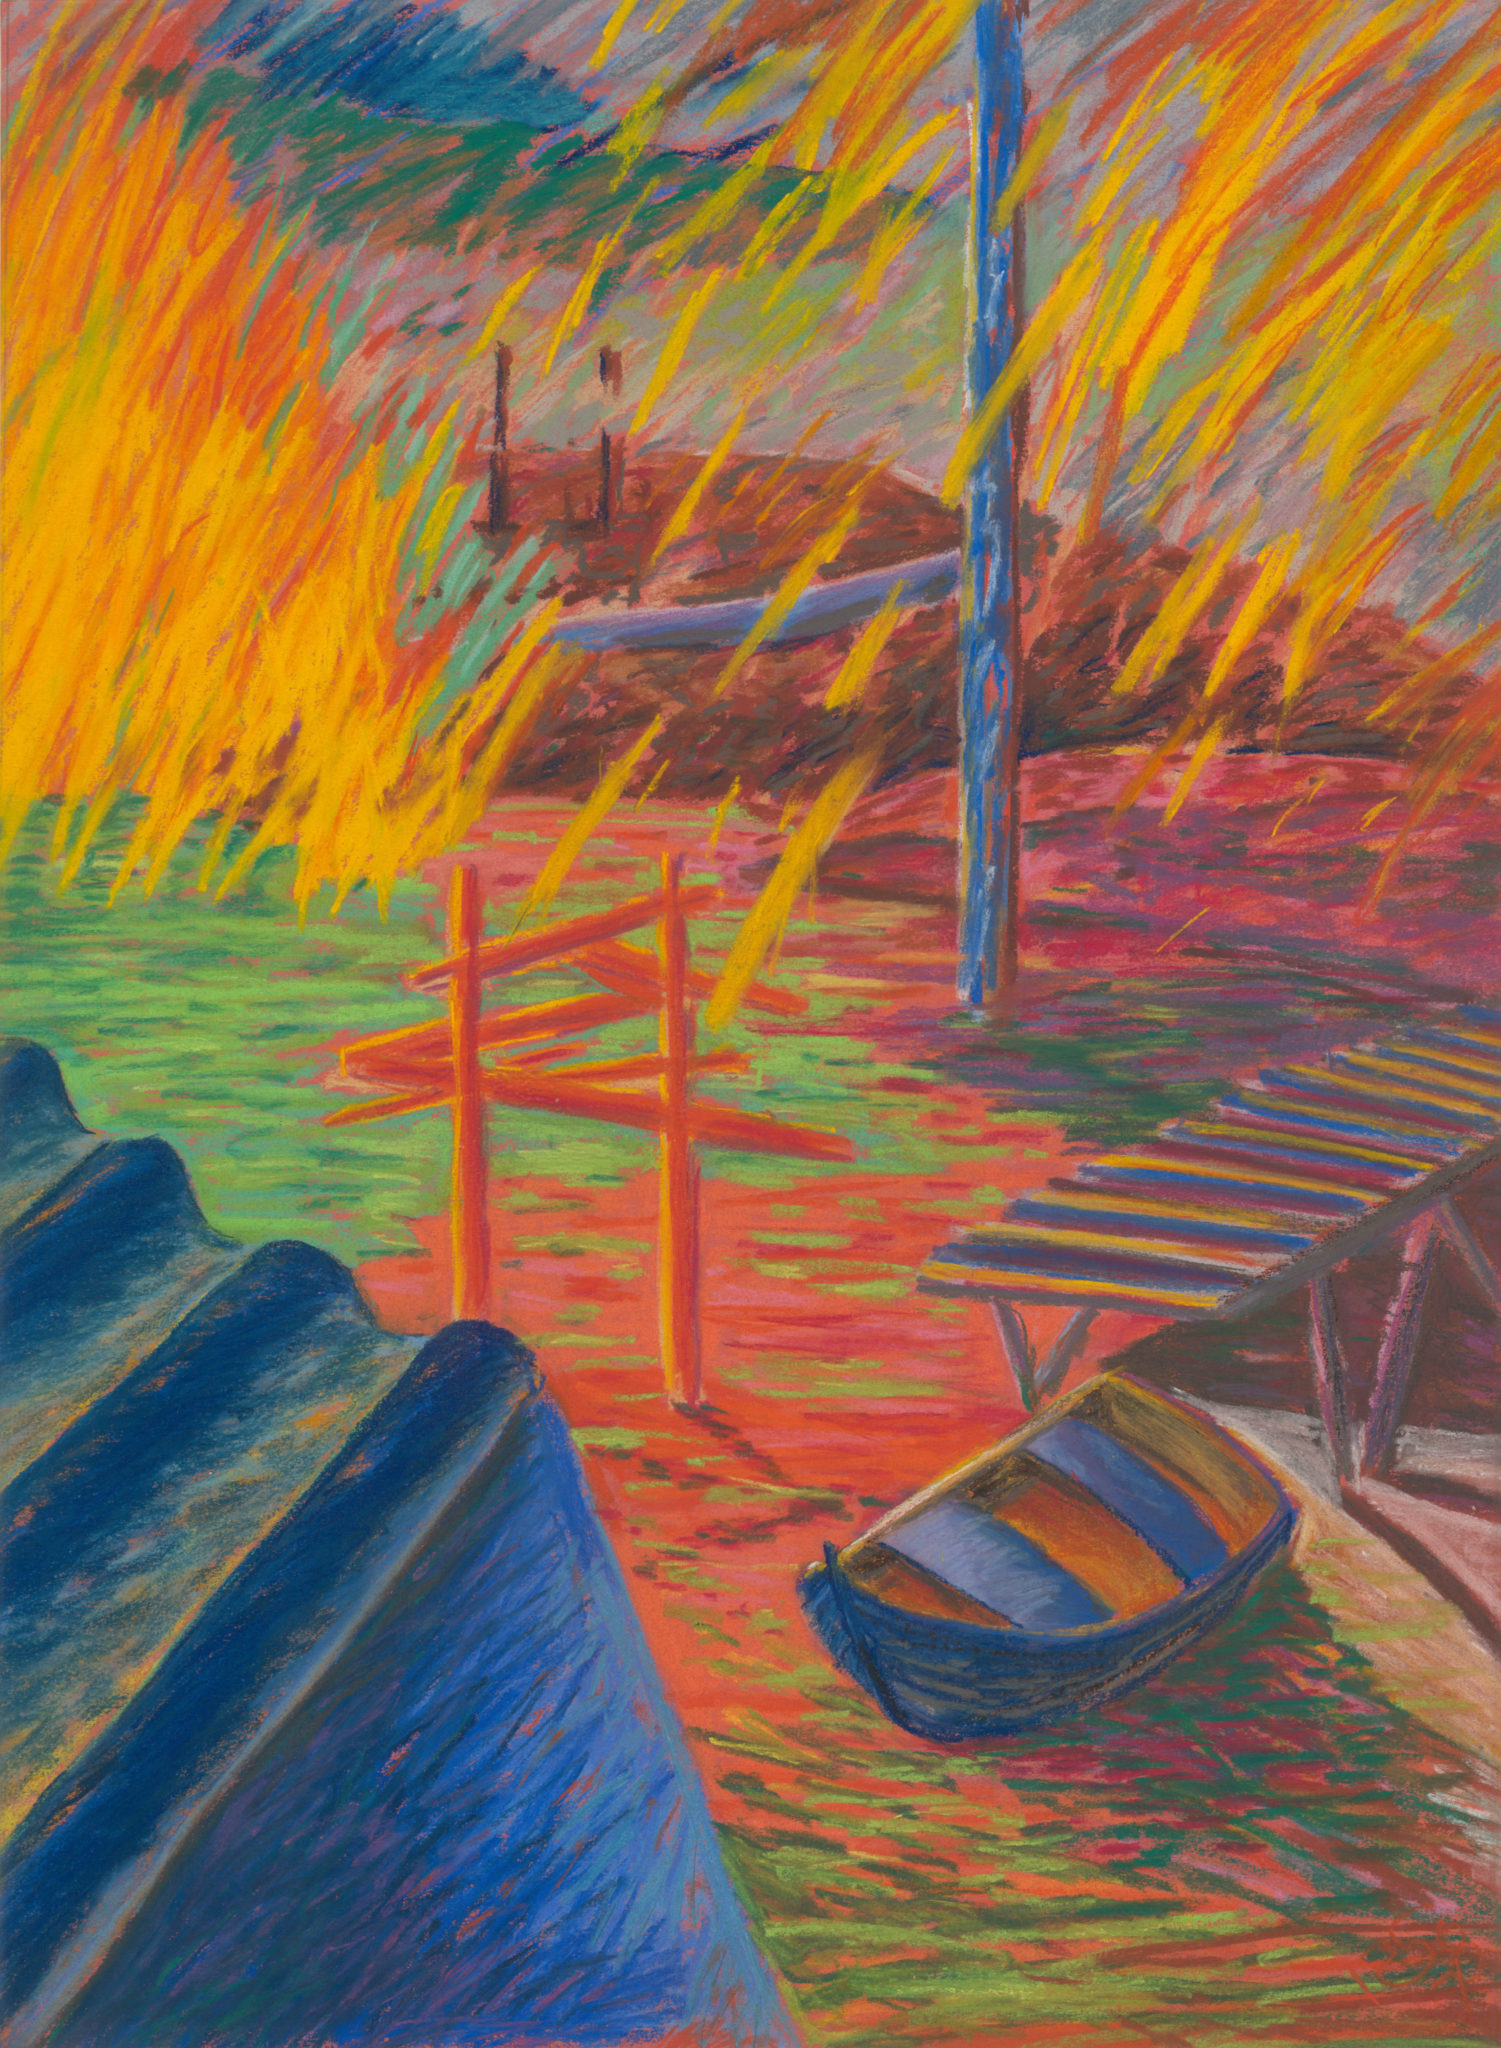 Rodney Scherer, Electro Magnetic Landscape, 1987, Pastel on paper, 67 x 48 cm, Latrobe Regional Gallery Collection, gift of the Latrobe Regional Arts Board, 1995.